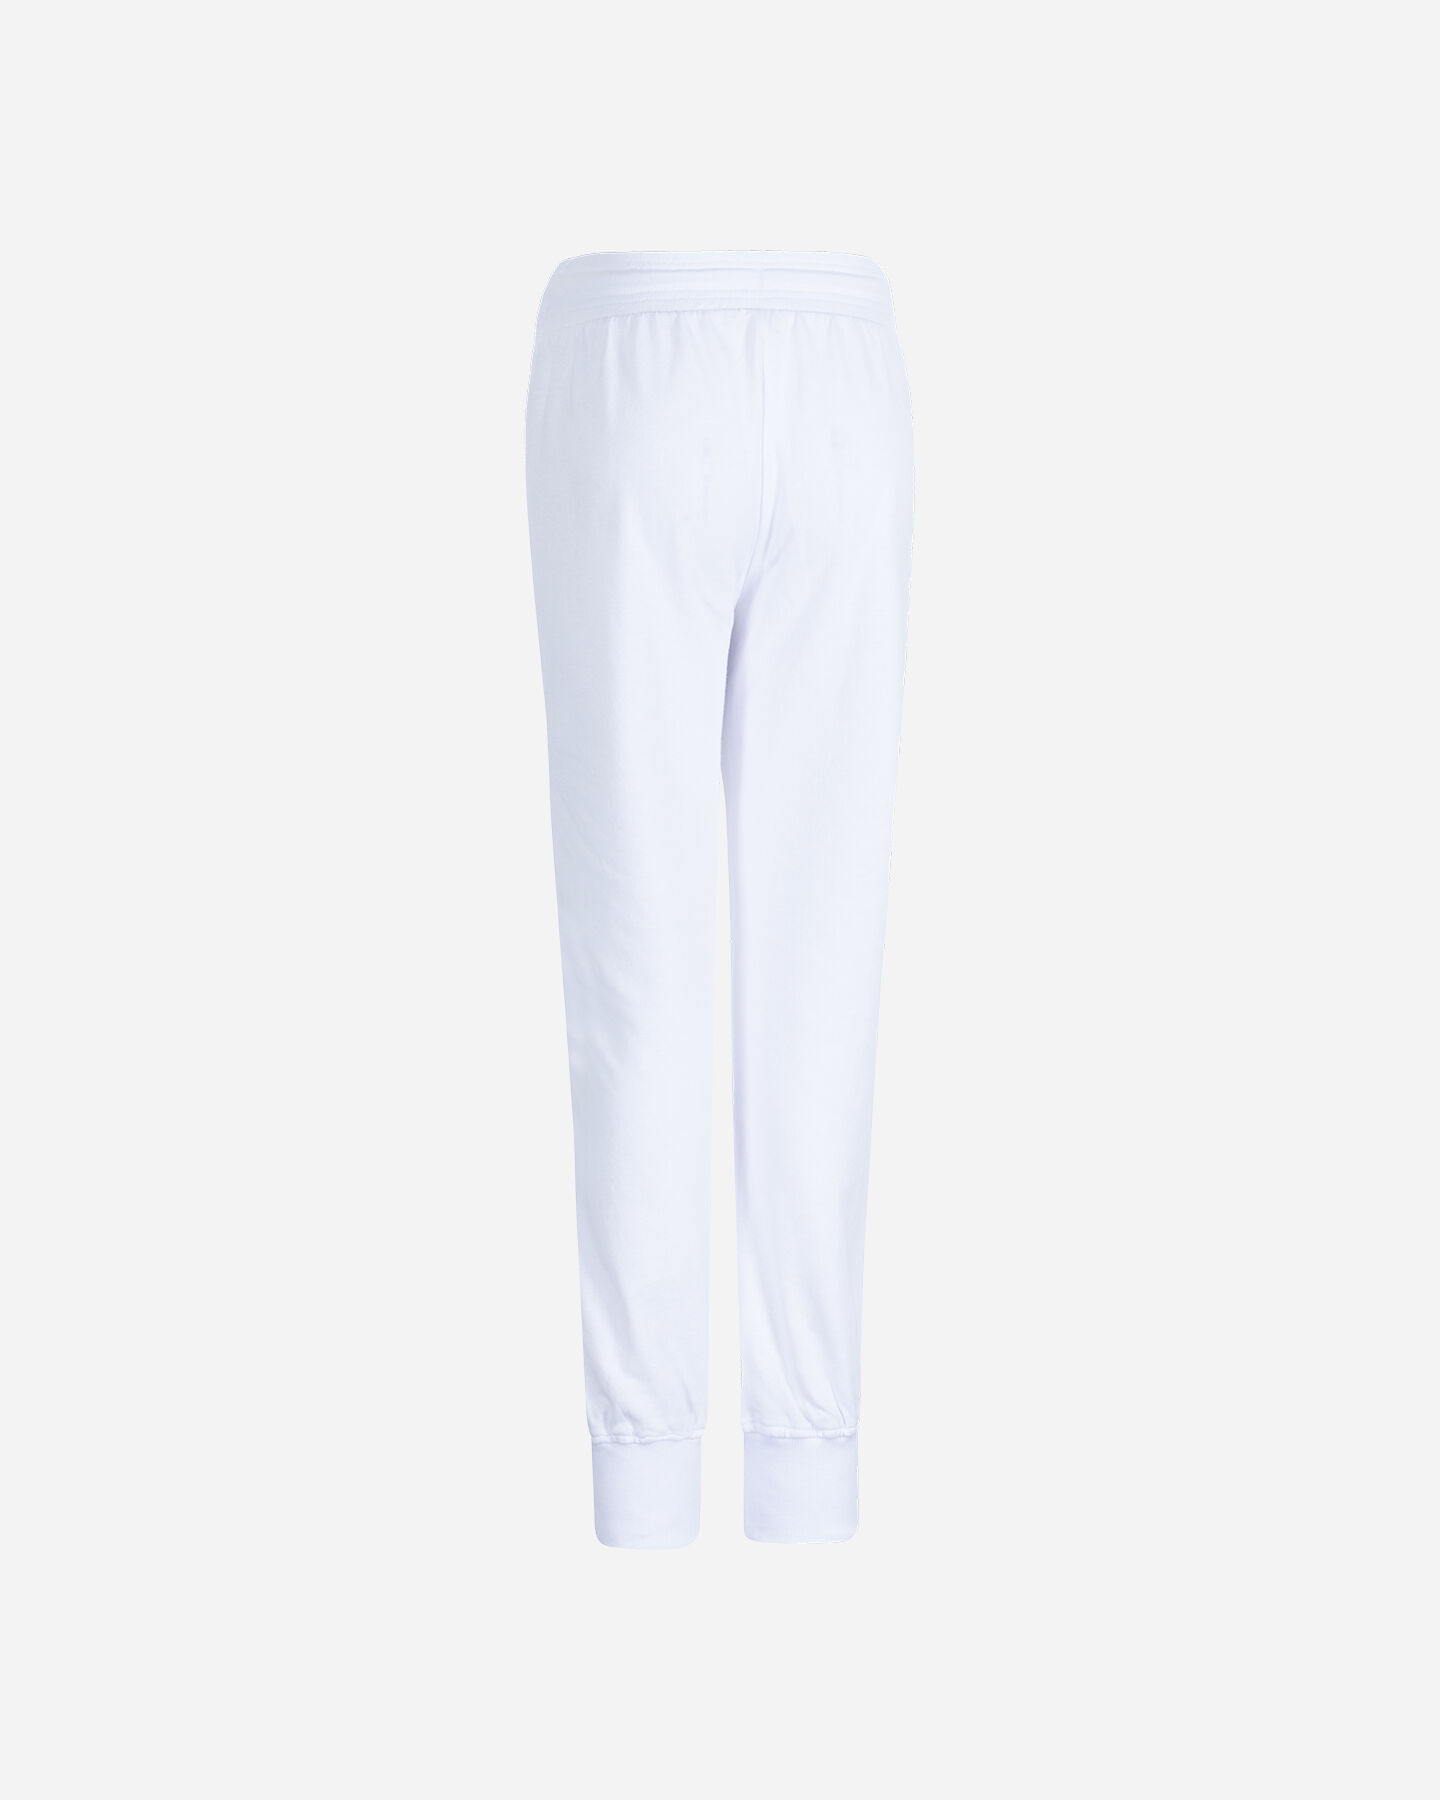  Pantalone ARENA ATHLETICS JR S4118892|001|12A scatto 1